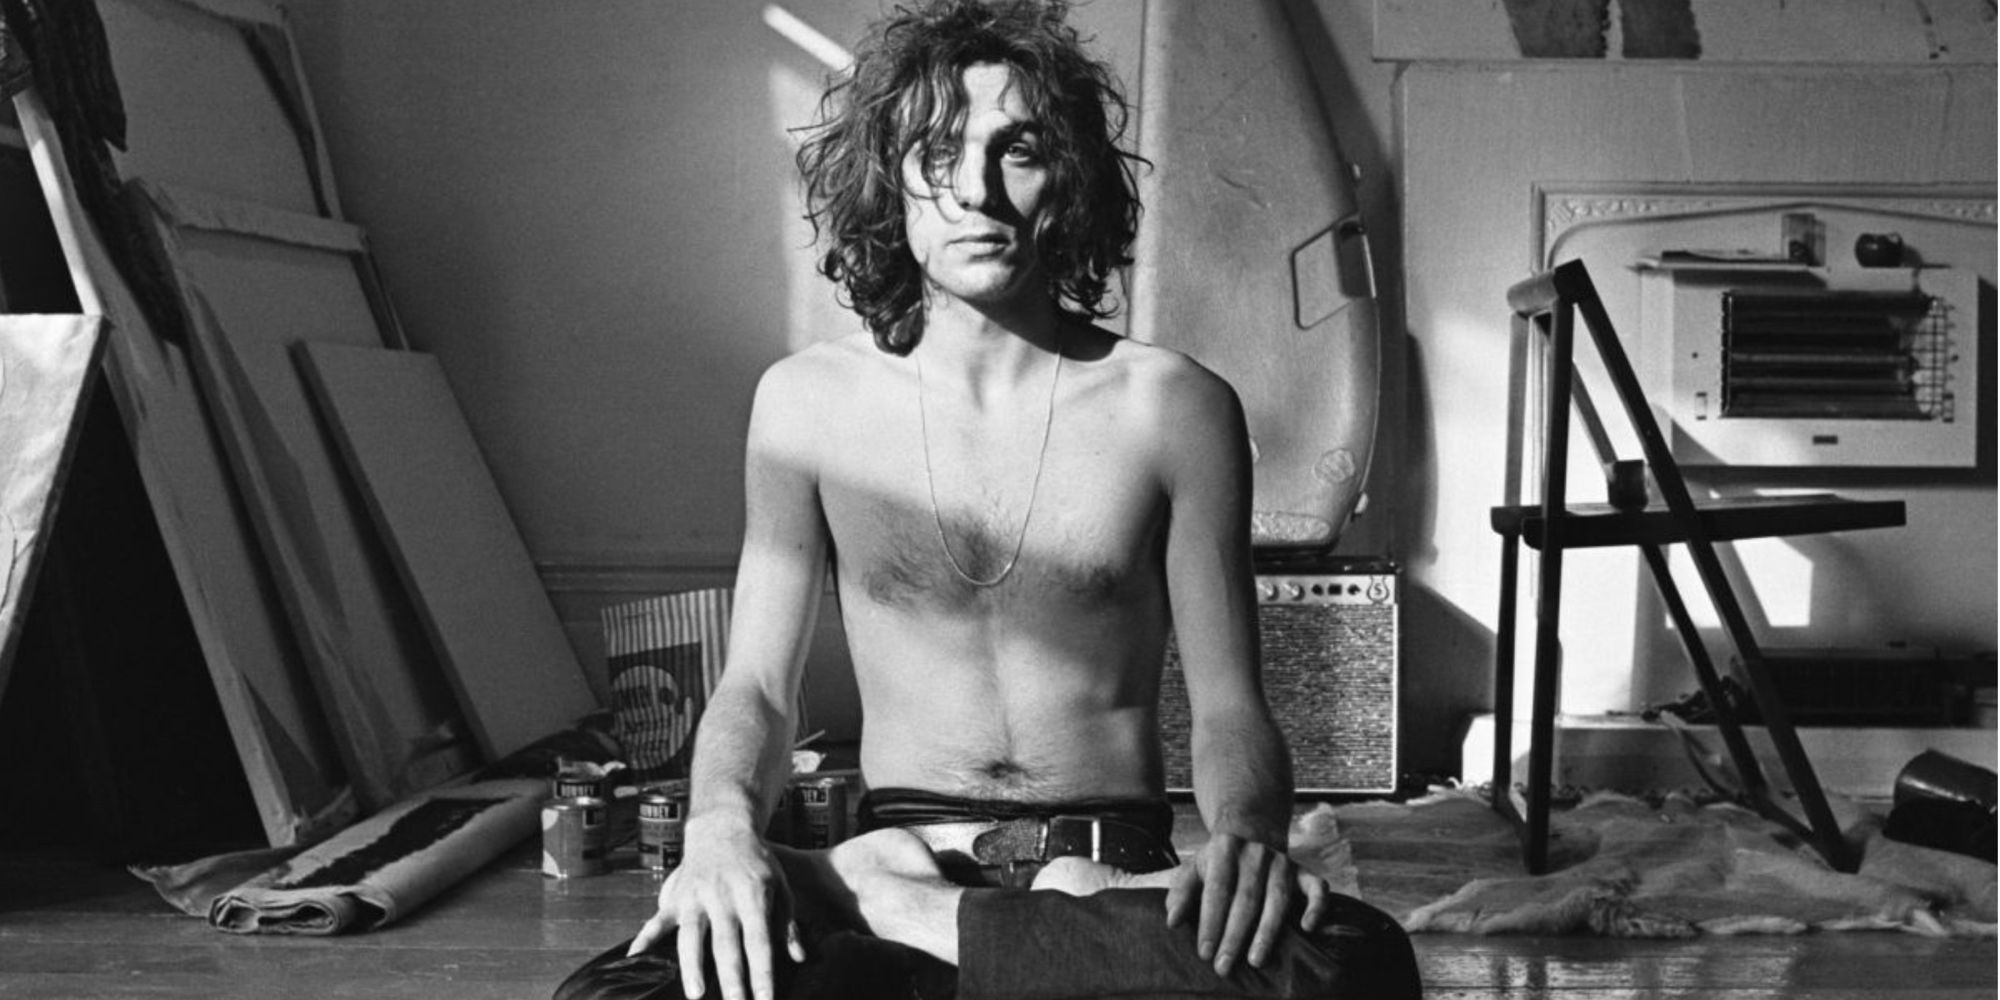 A shirtless Pink Floyd frontman